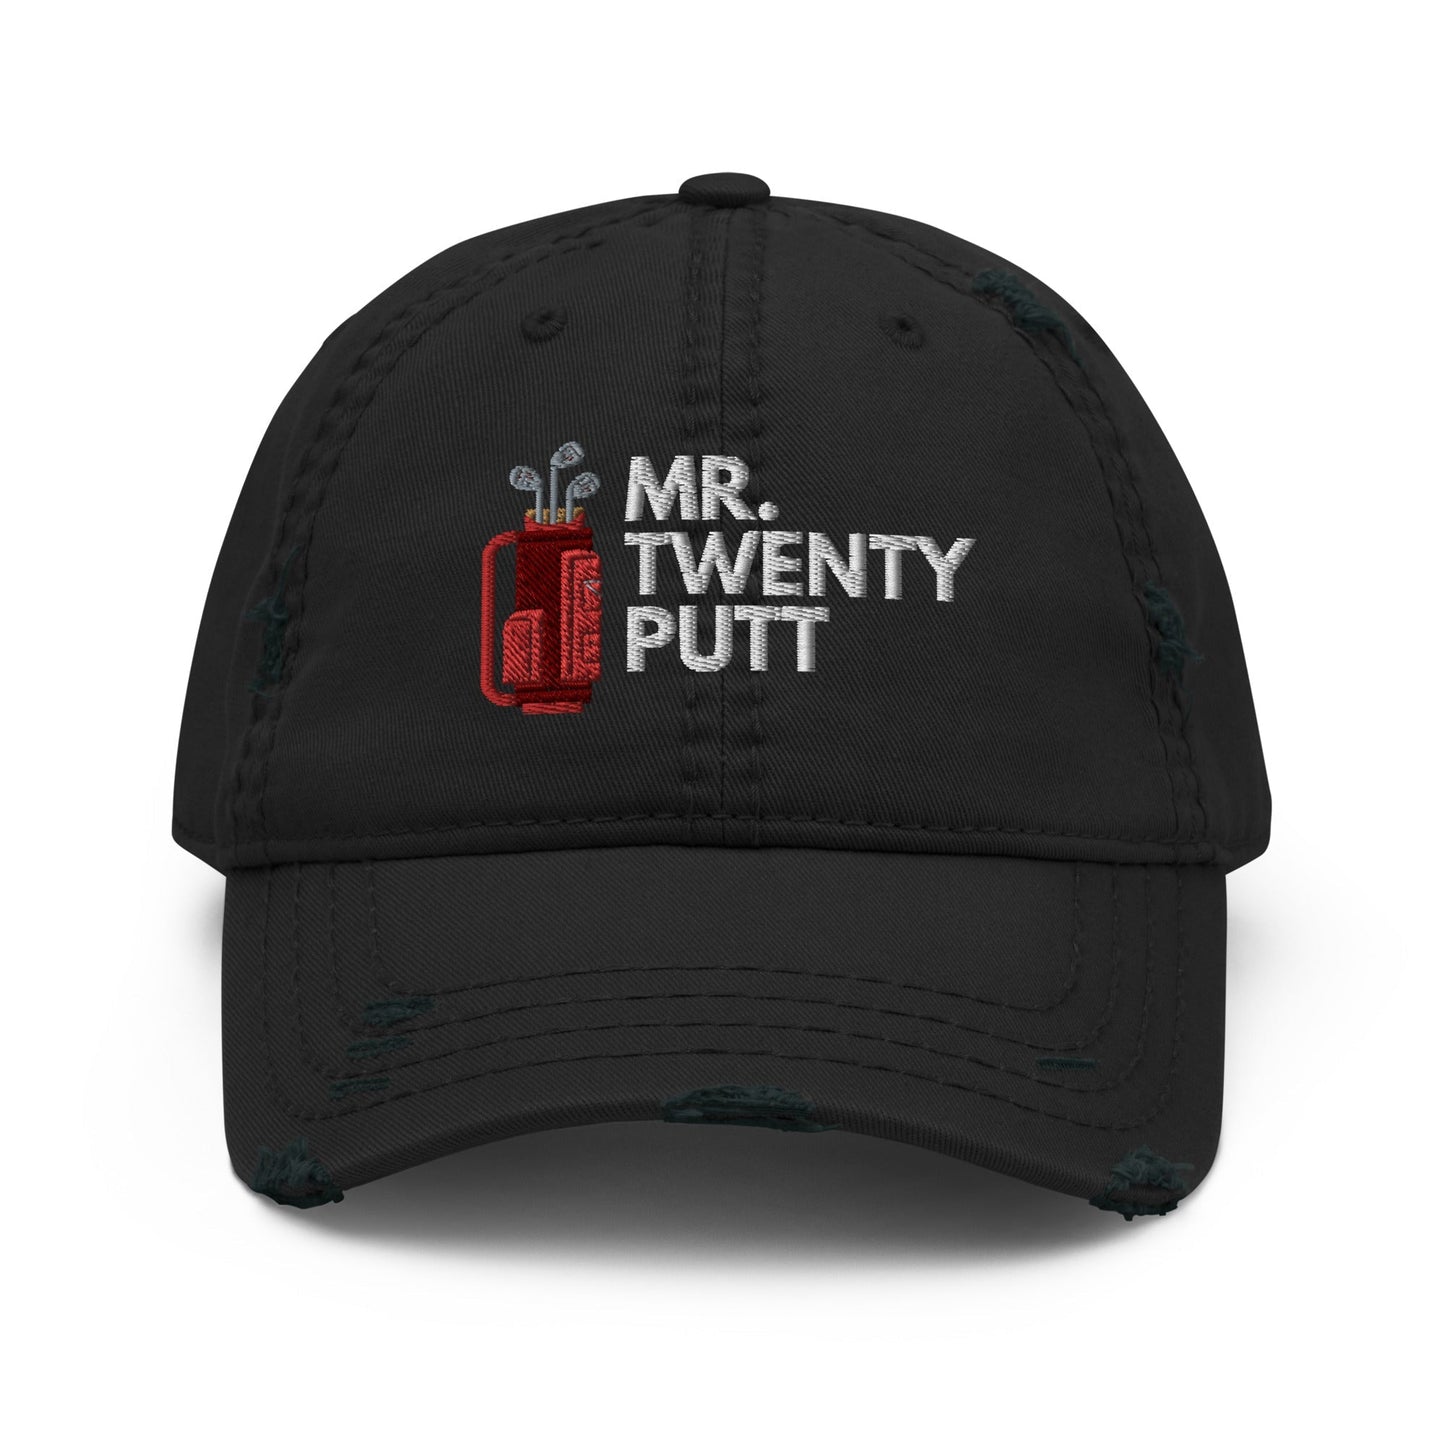 Funny Golfer Gifts  Distressed Cap Black Mr. Twenty Putt Distressed Hat